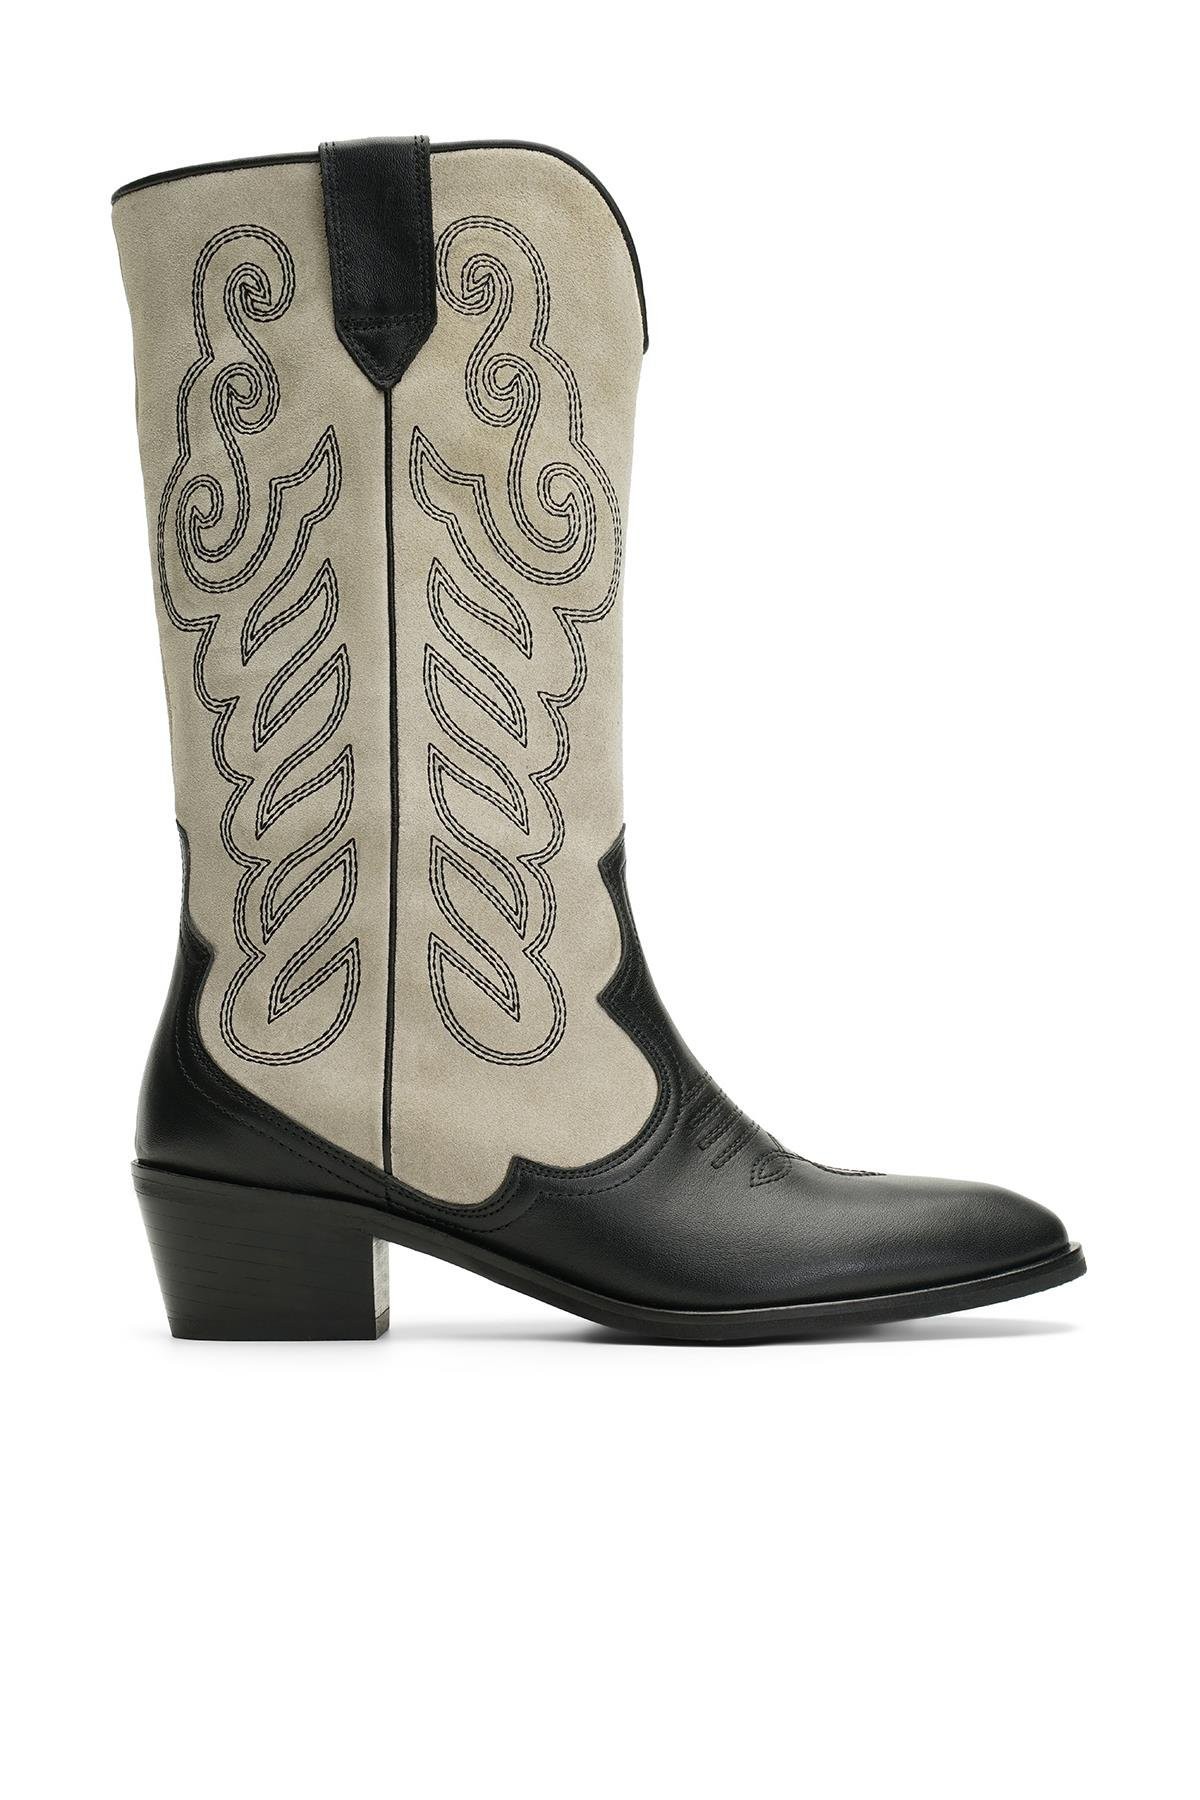 Jabotter Gillian Black Leather Beige Suede Cowboy Boots